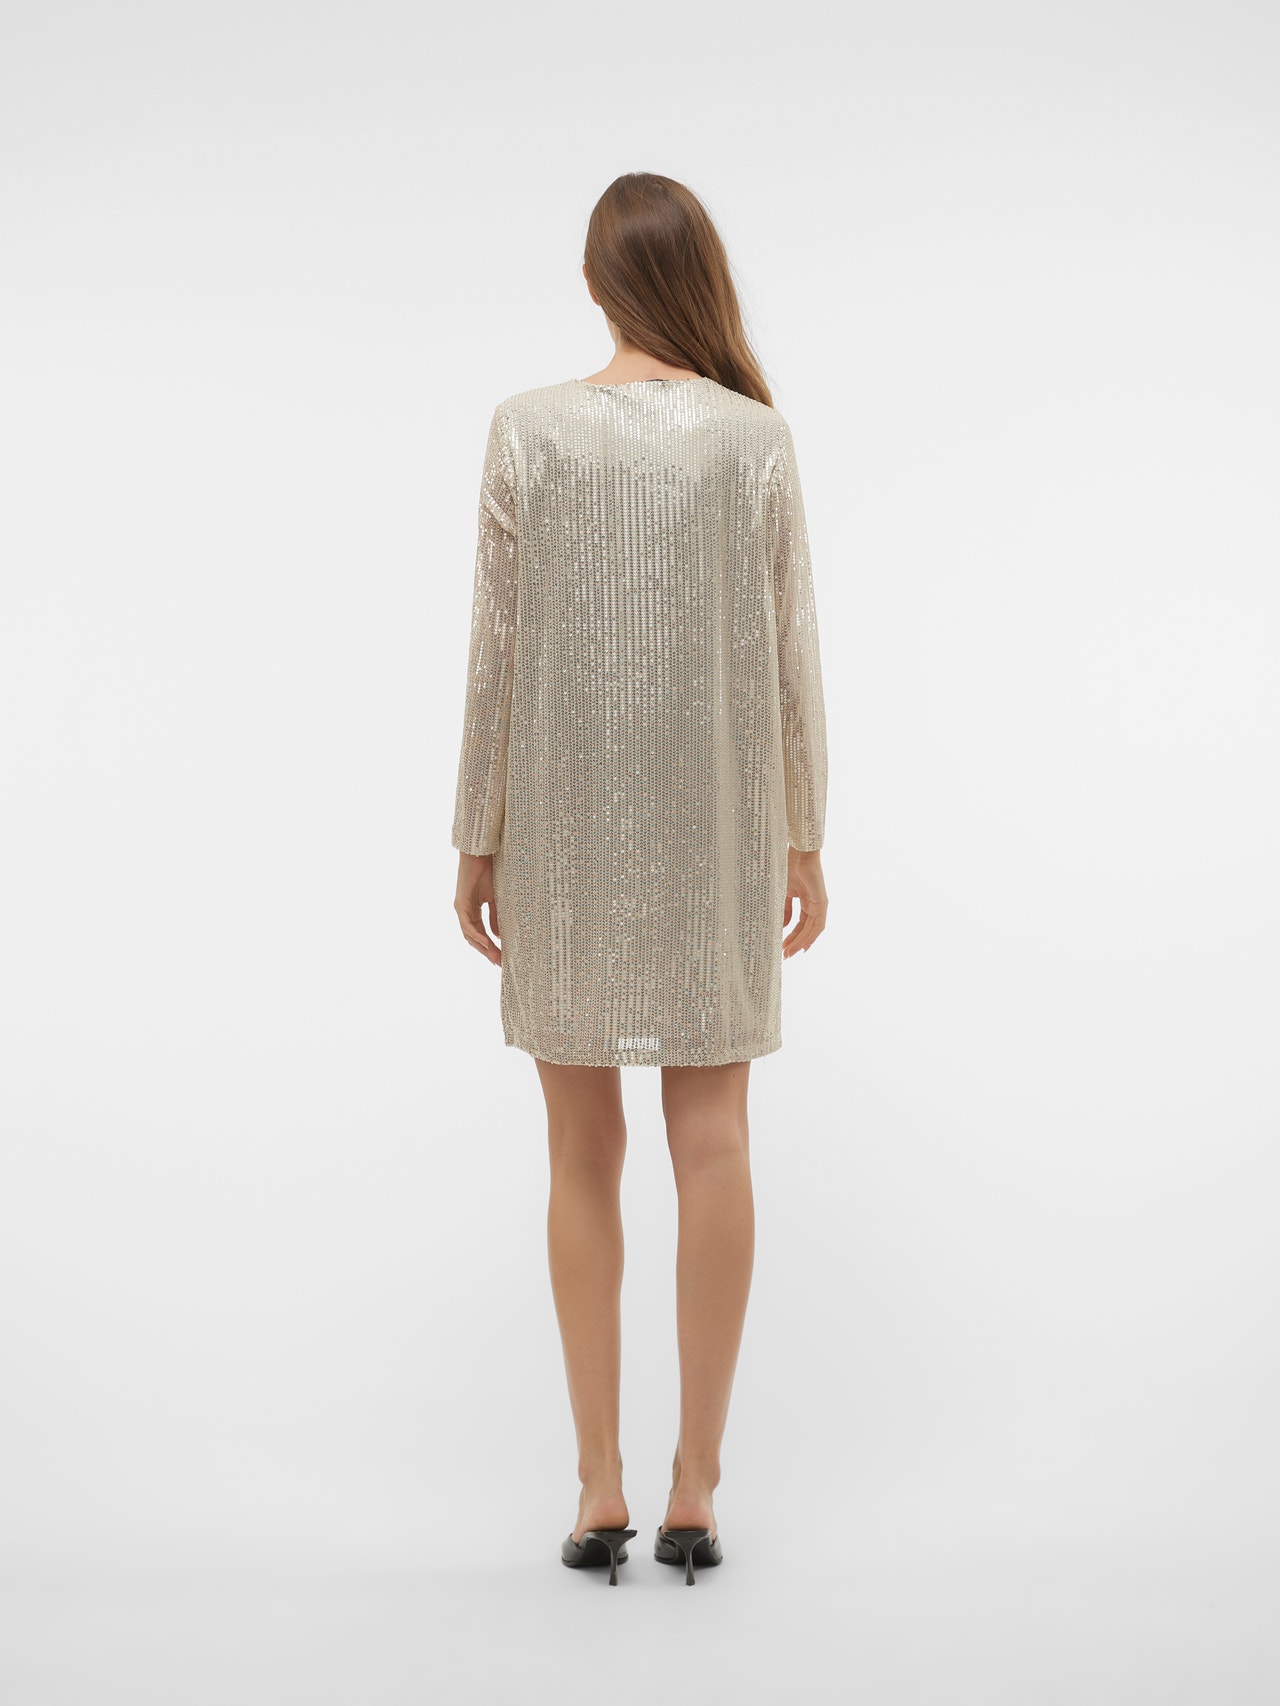 VMMONALISE Short dress 30% Moda® with Vero | discount